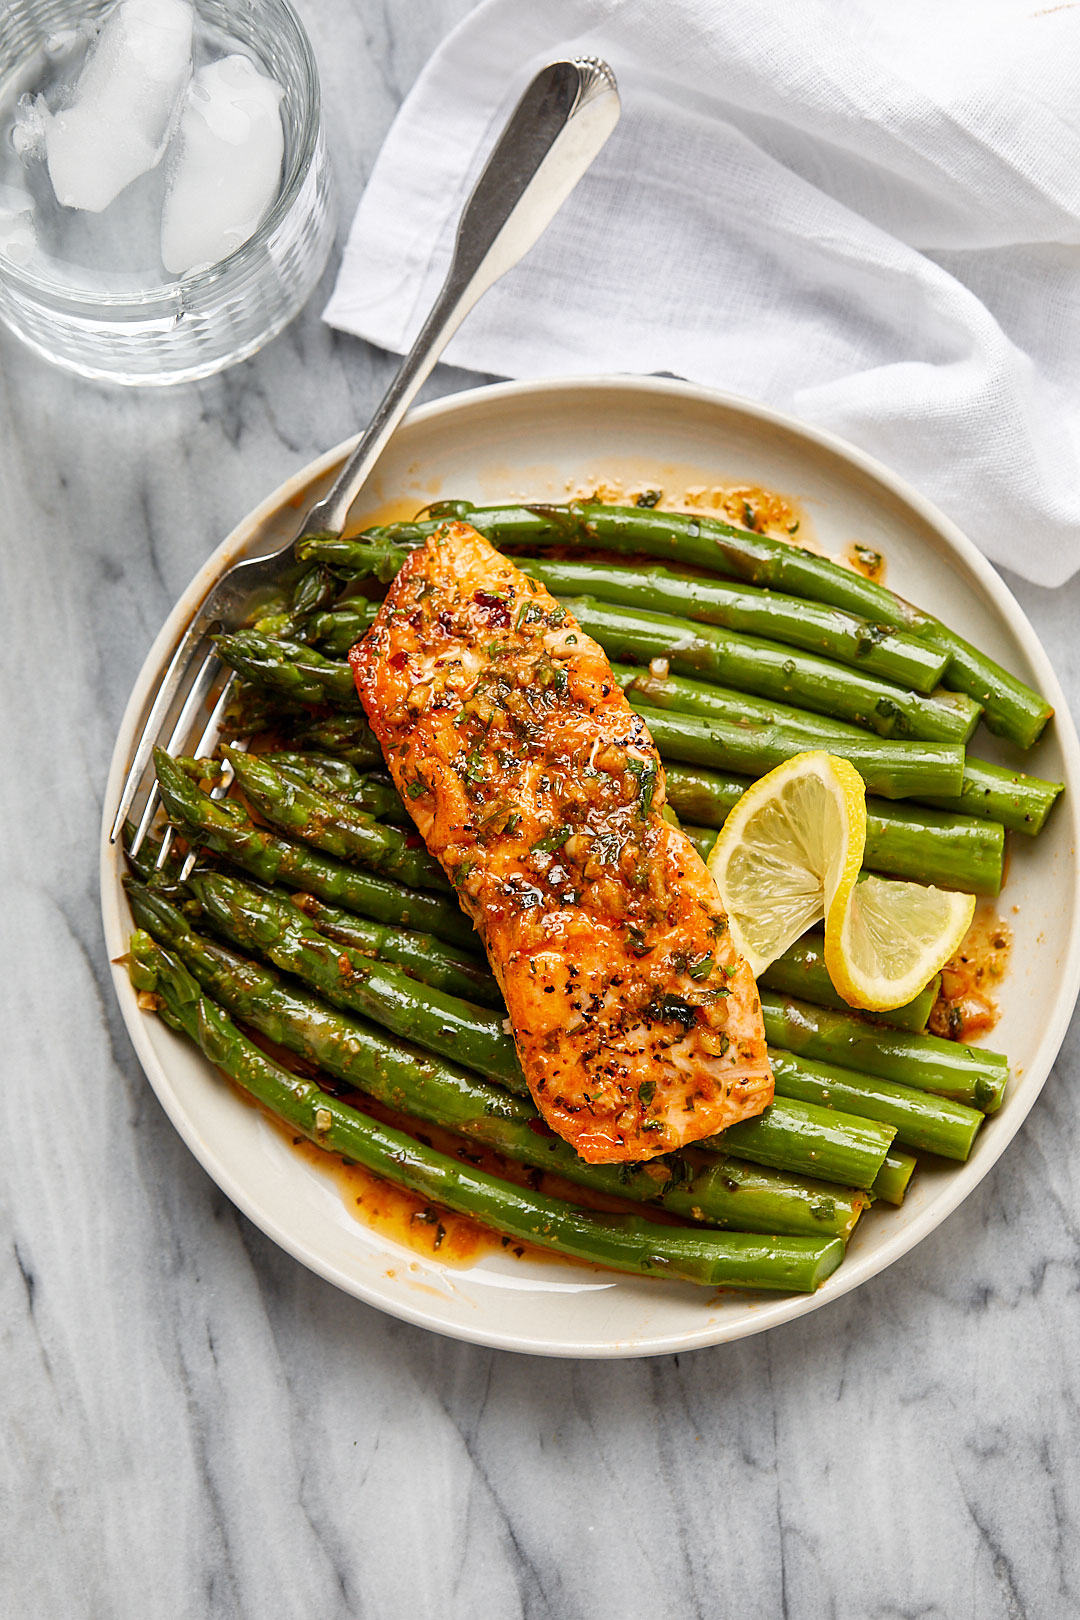 Garlic Butter Salmon Recipe with Lemon Asparagus – Healthy salmon